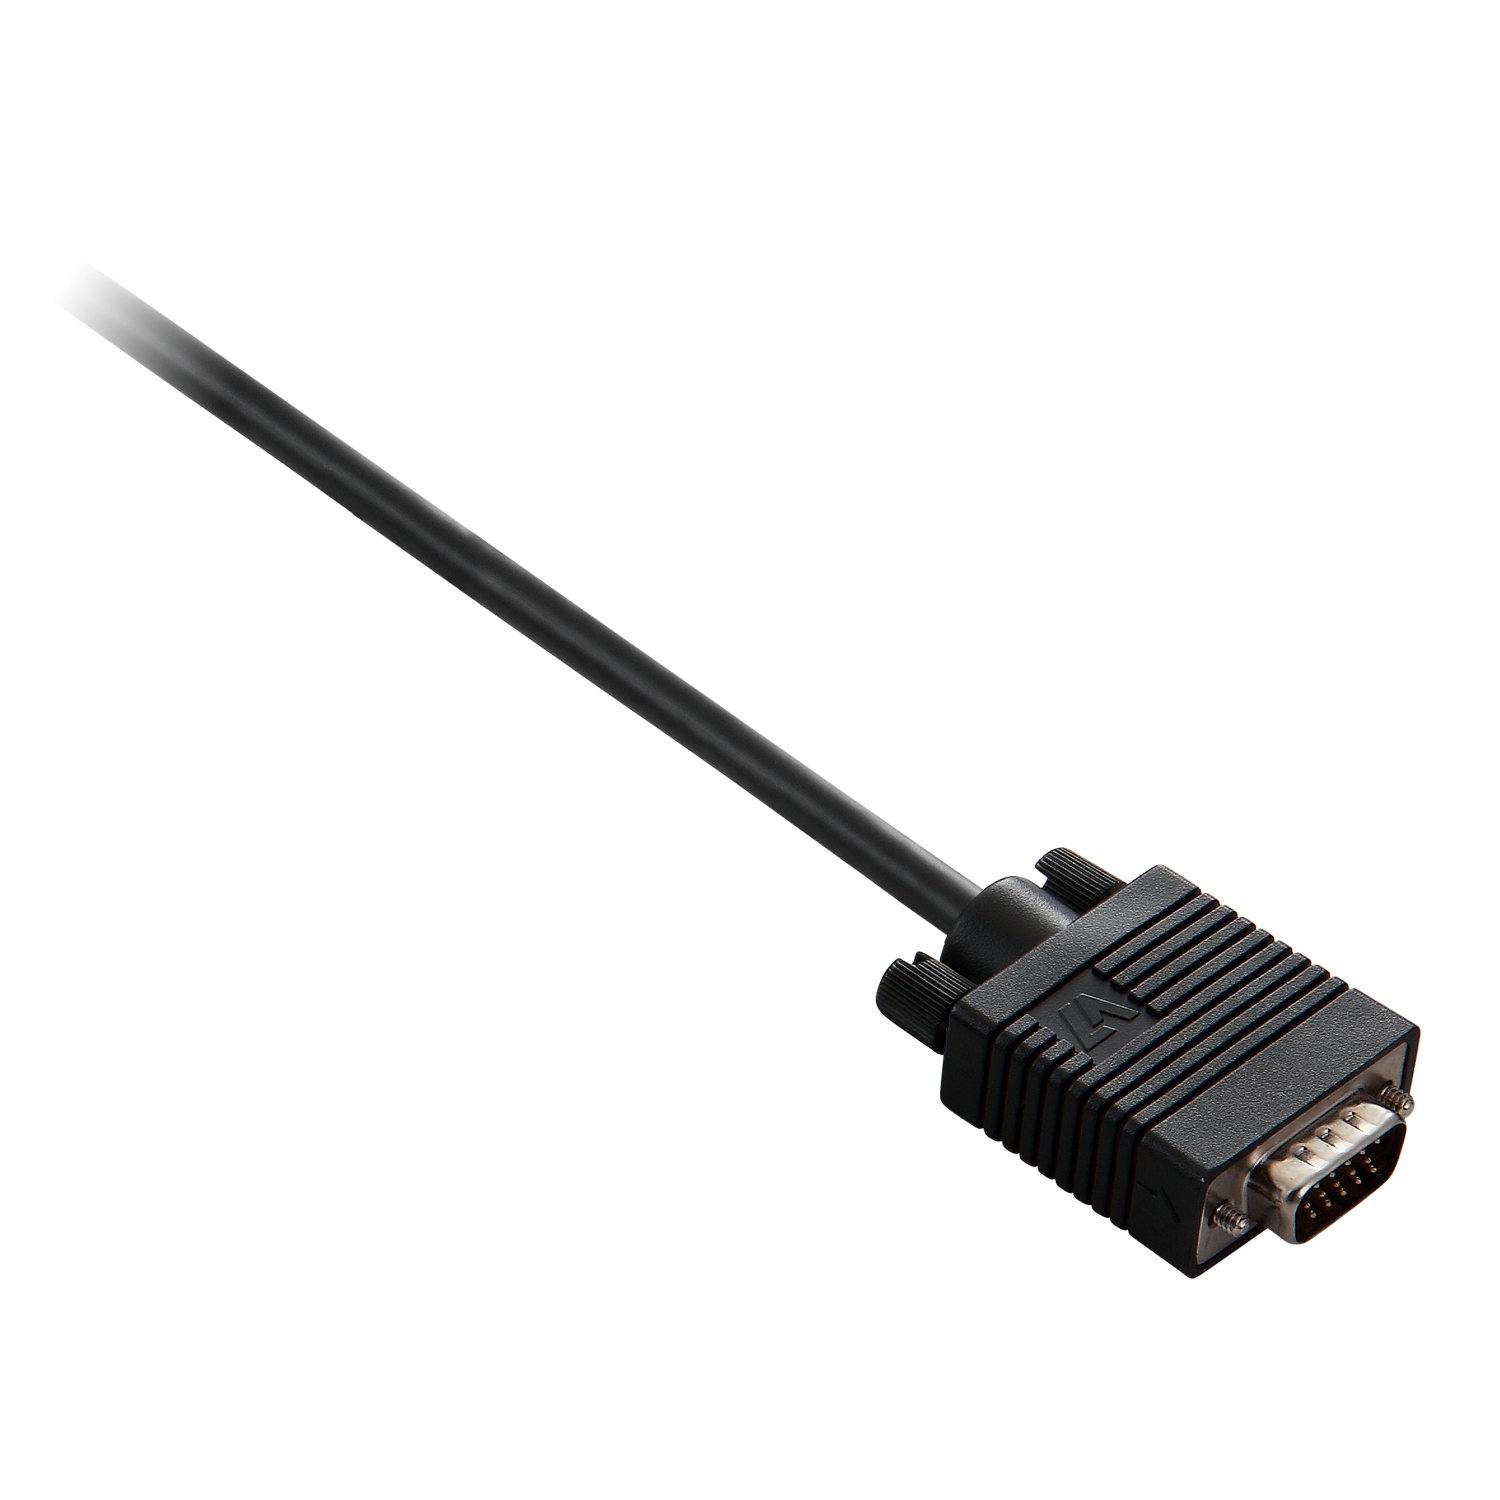 V7 - Cables                      Vga Cable 5m Black                  Ferrite Core M/m                    V7e2vga-05m-blk